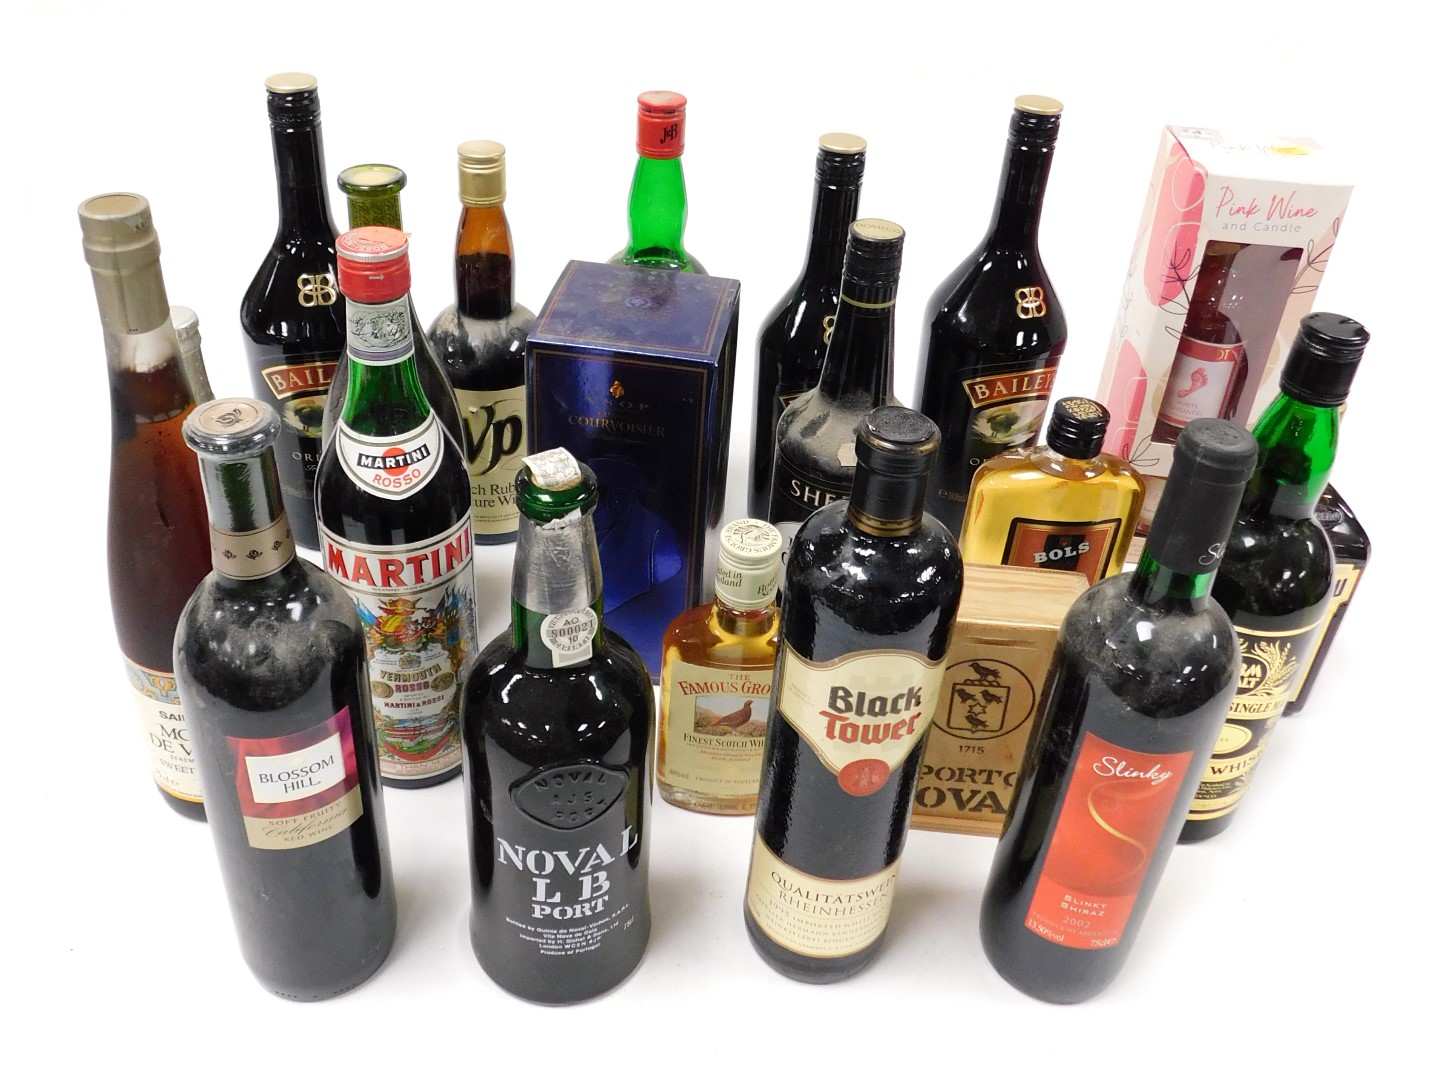 Wines and spirits, including a bottle of Courvoisier VSOP cognac, three bottles of Baileys Original